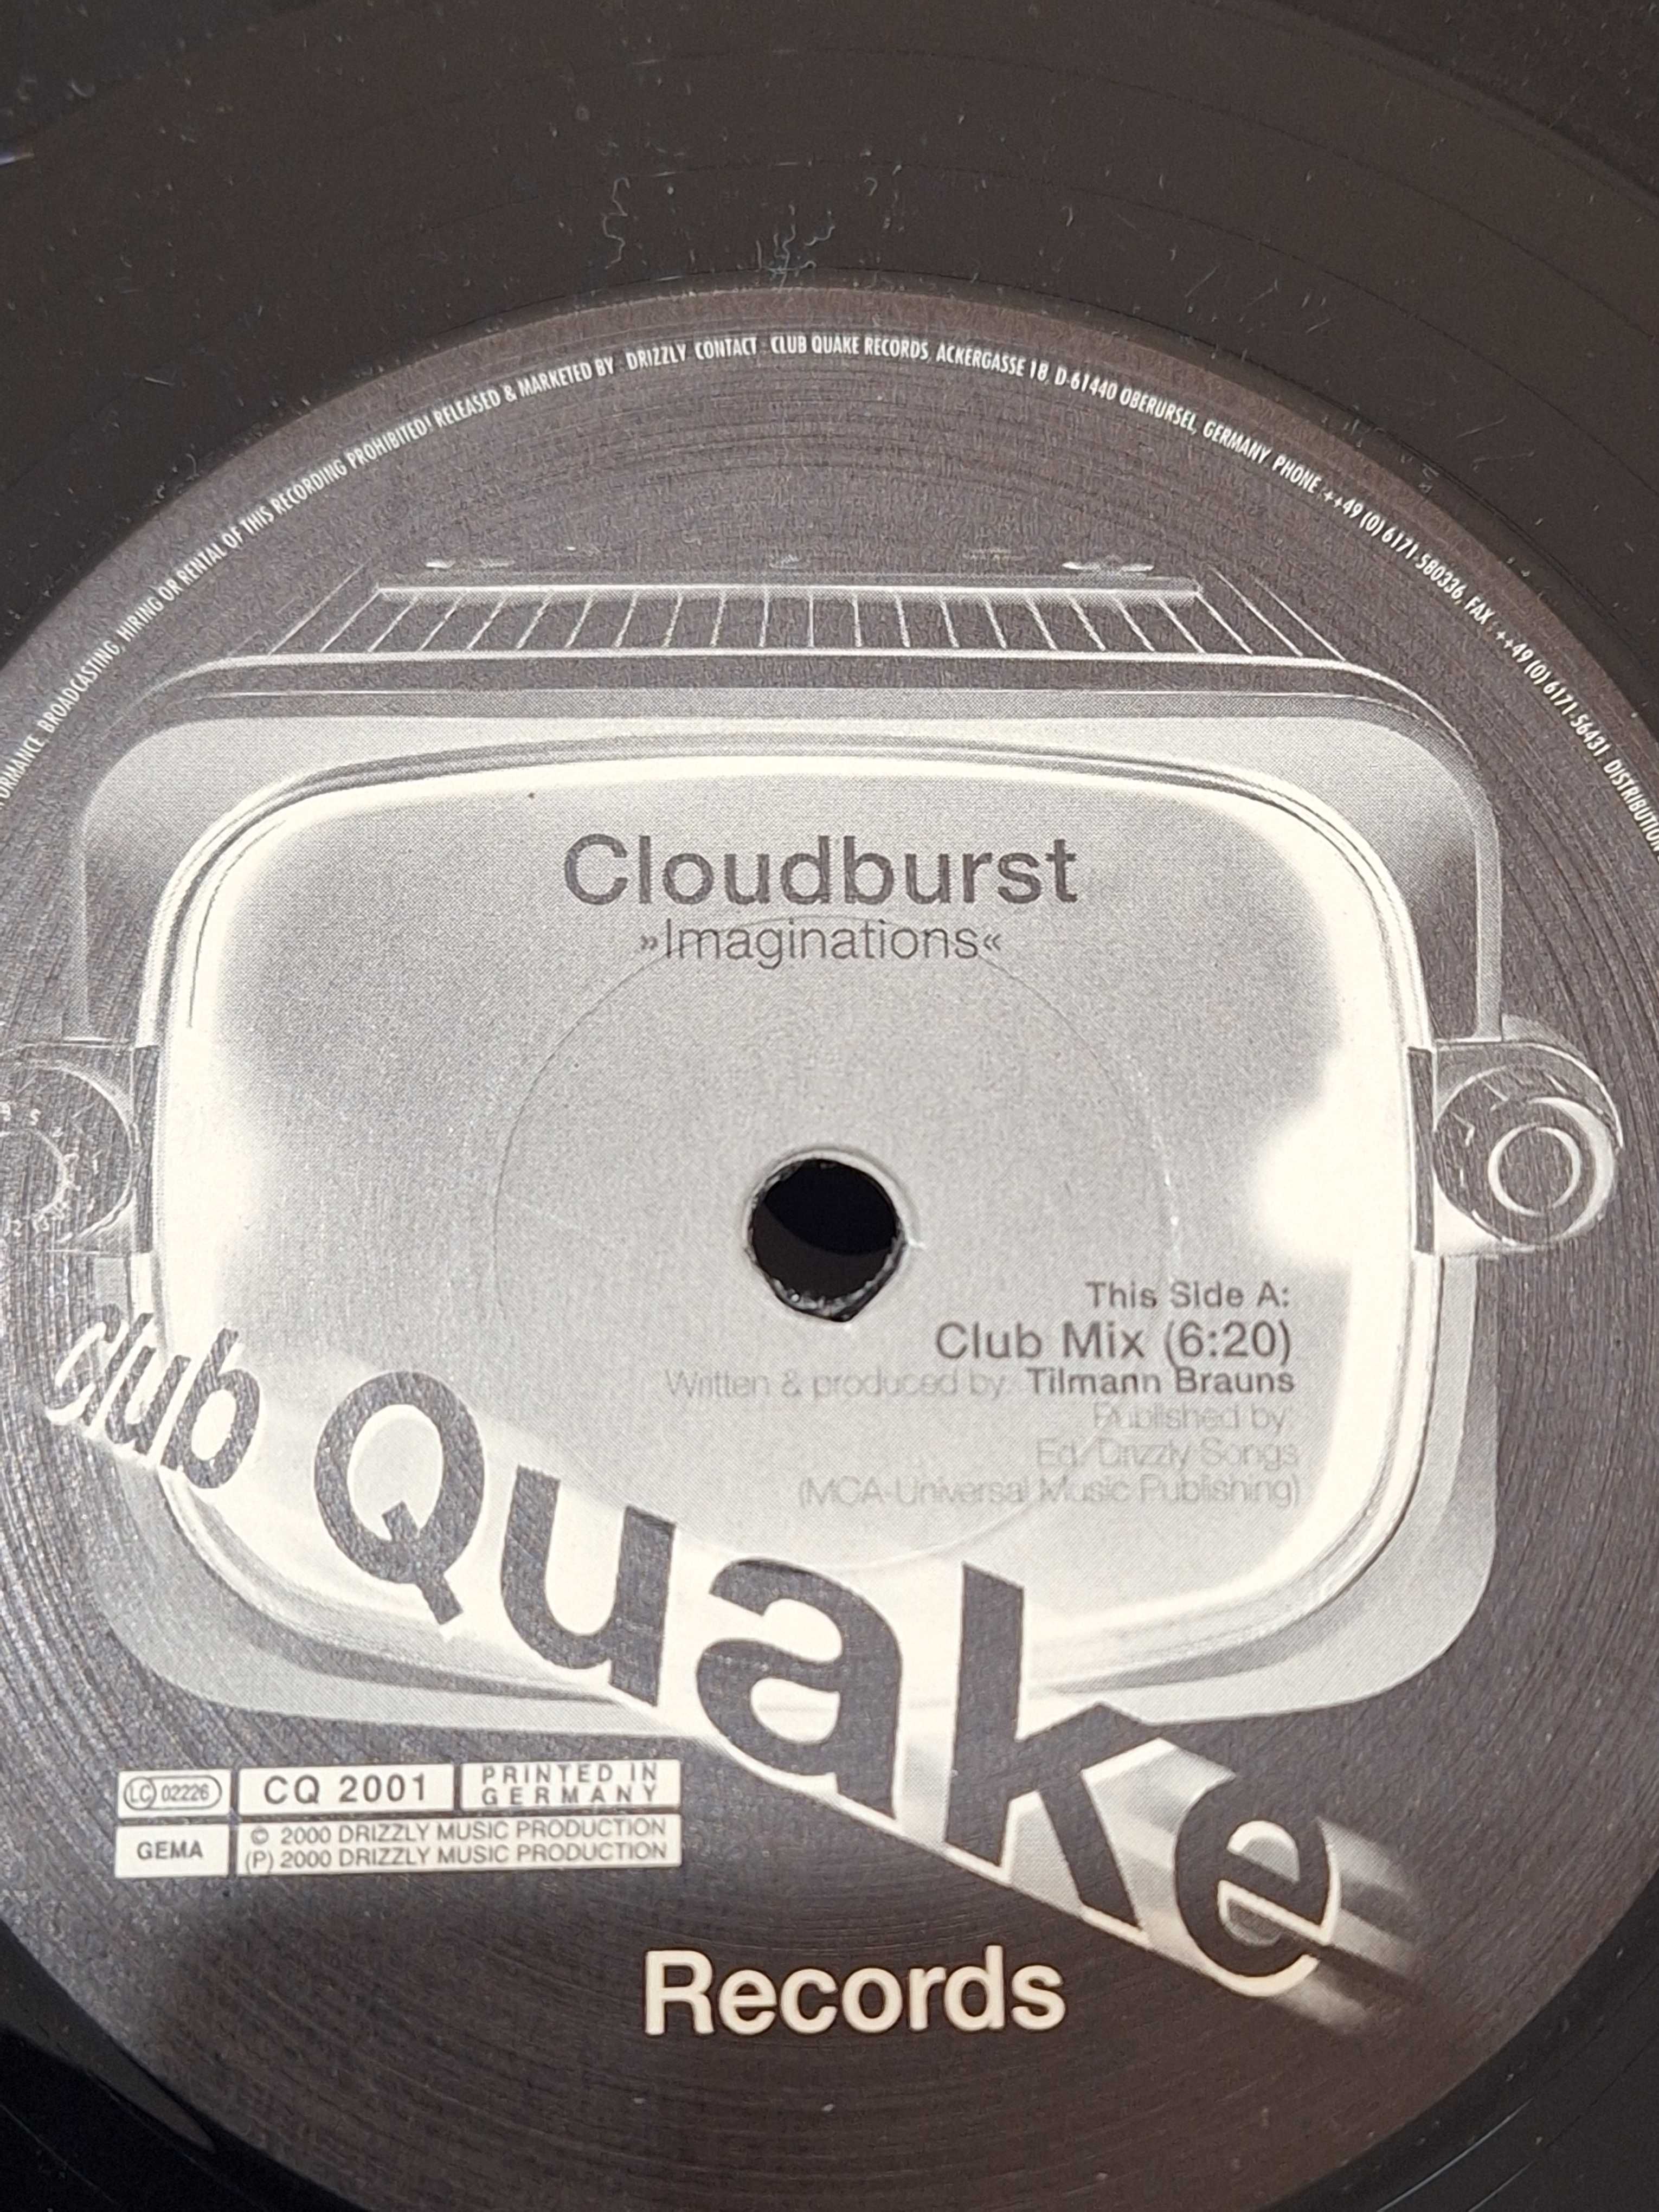 ZADBANA płyta winylowa Club Quake Records Claudburst Imaginations